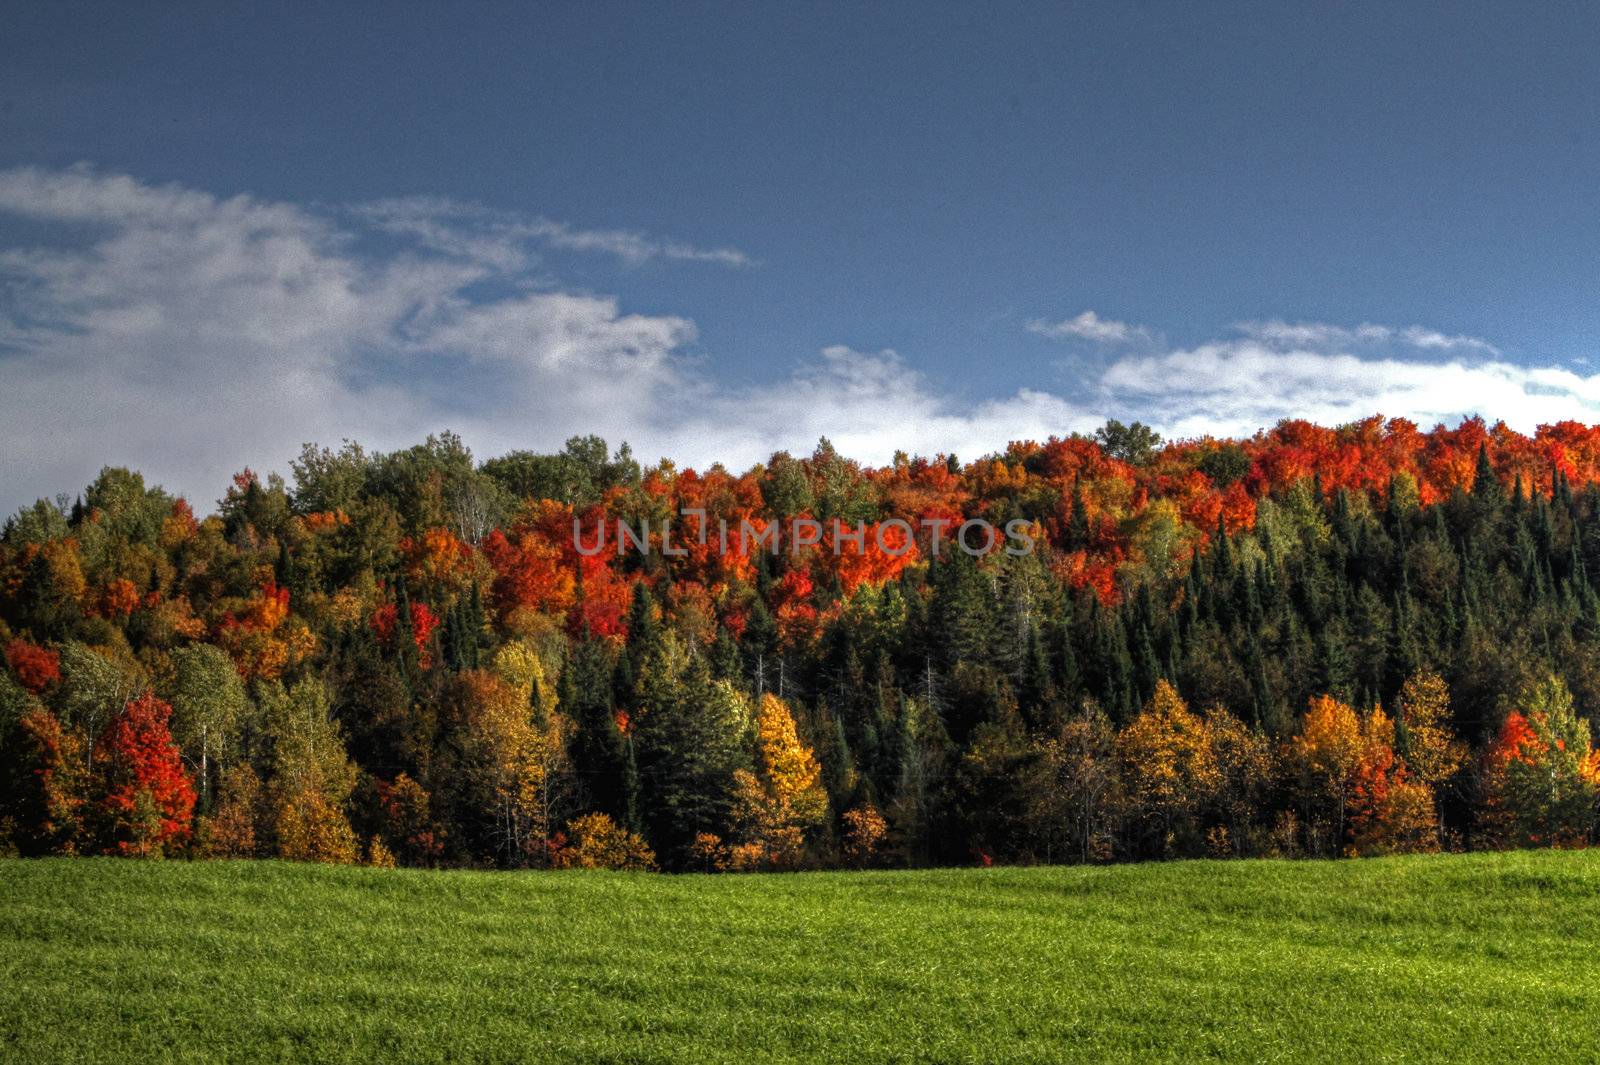 Colourful fall trees 99 by dbriyul